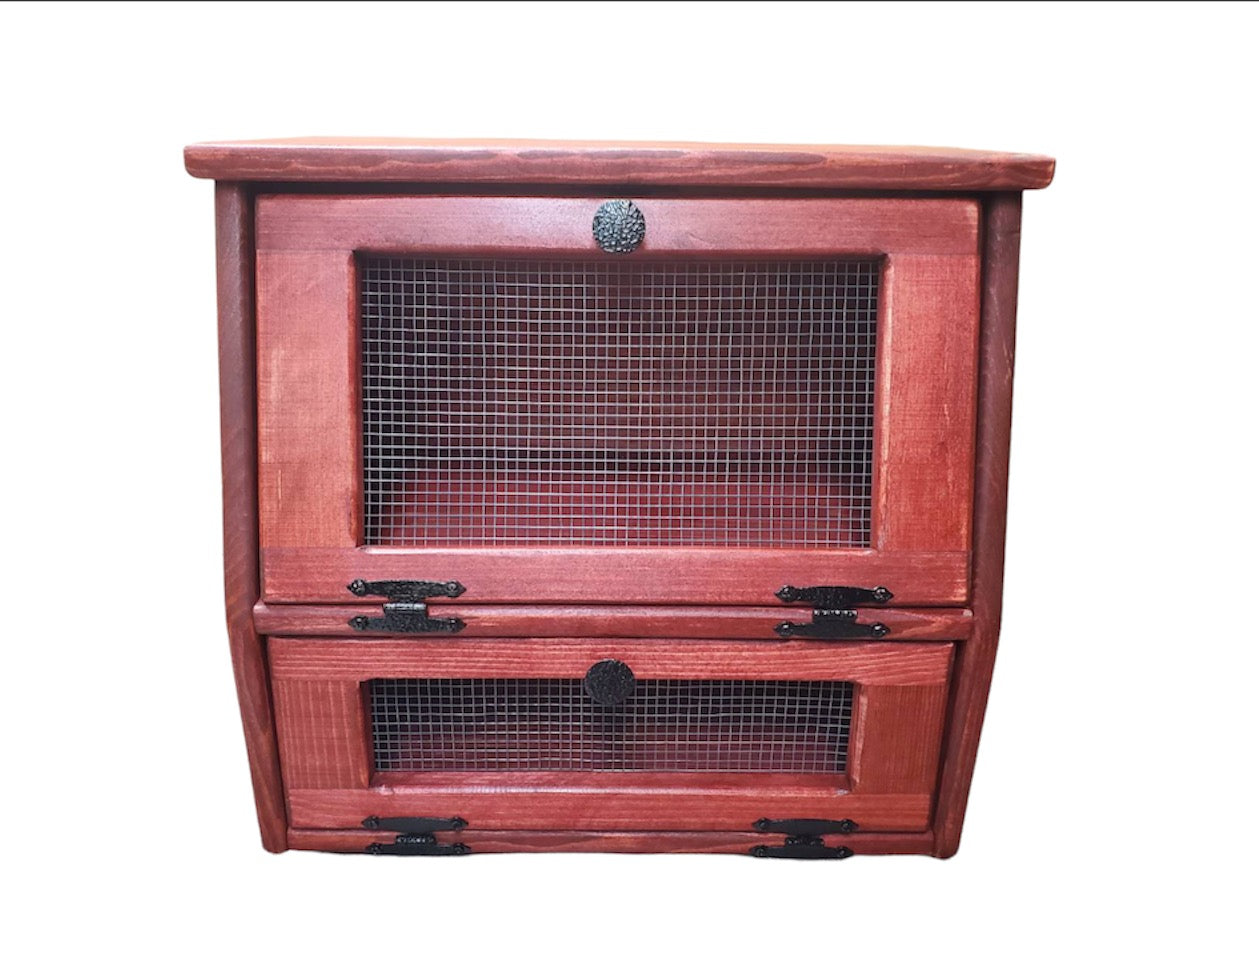 Rustic countertop bread box